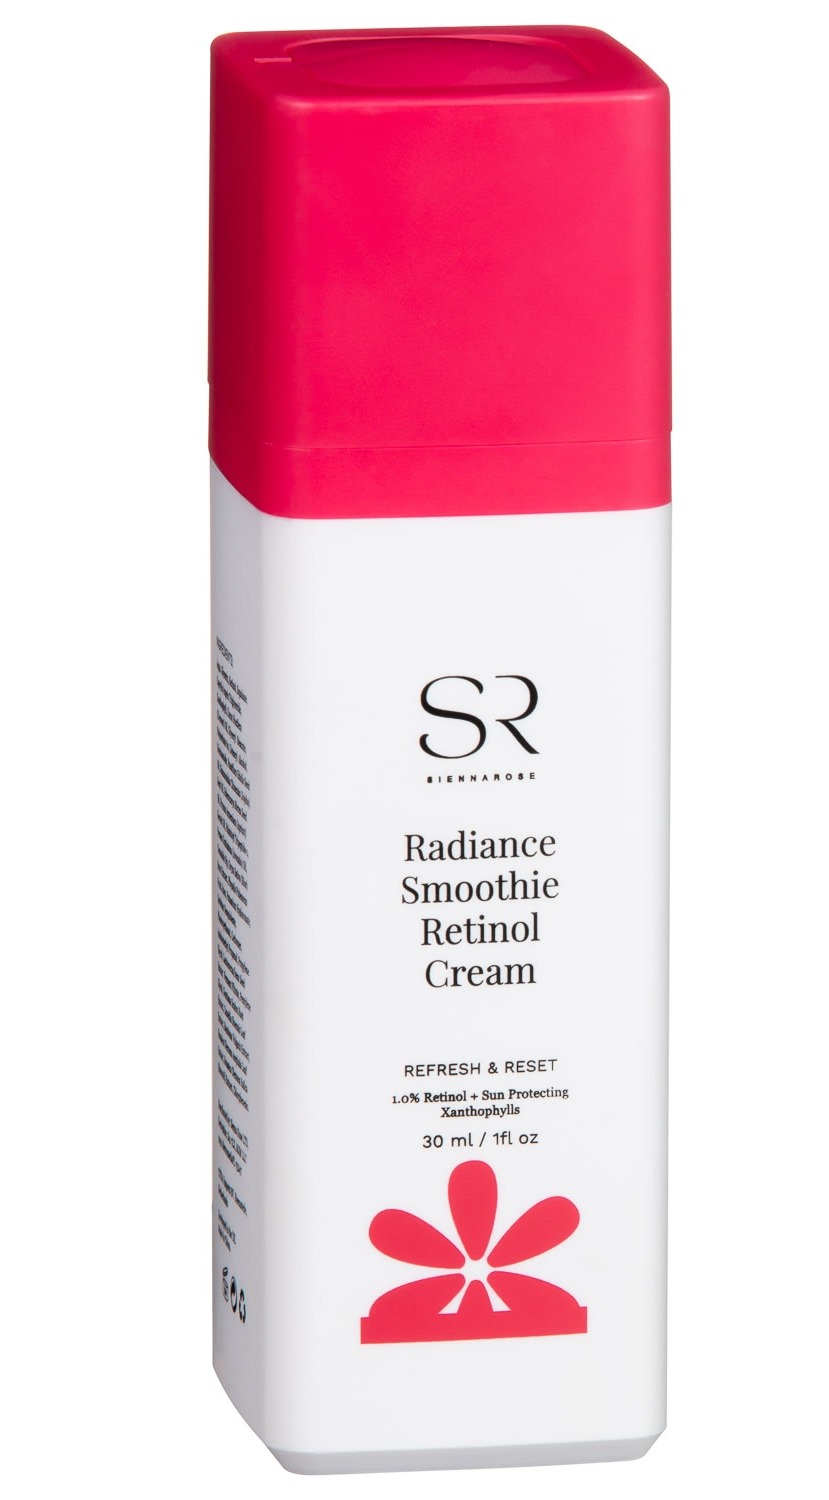 Or save with Sienna Rose Radiance Smoothie retinol cream just £4.99 at B&M